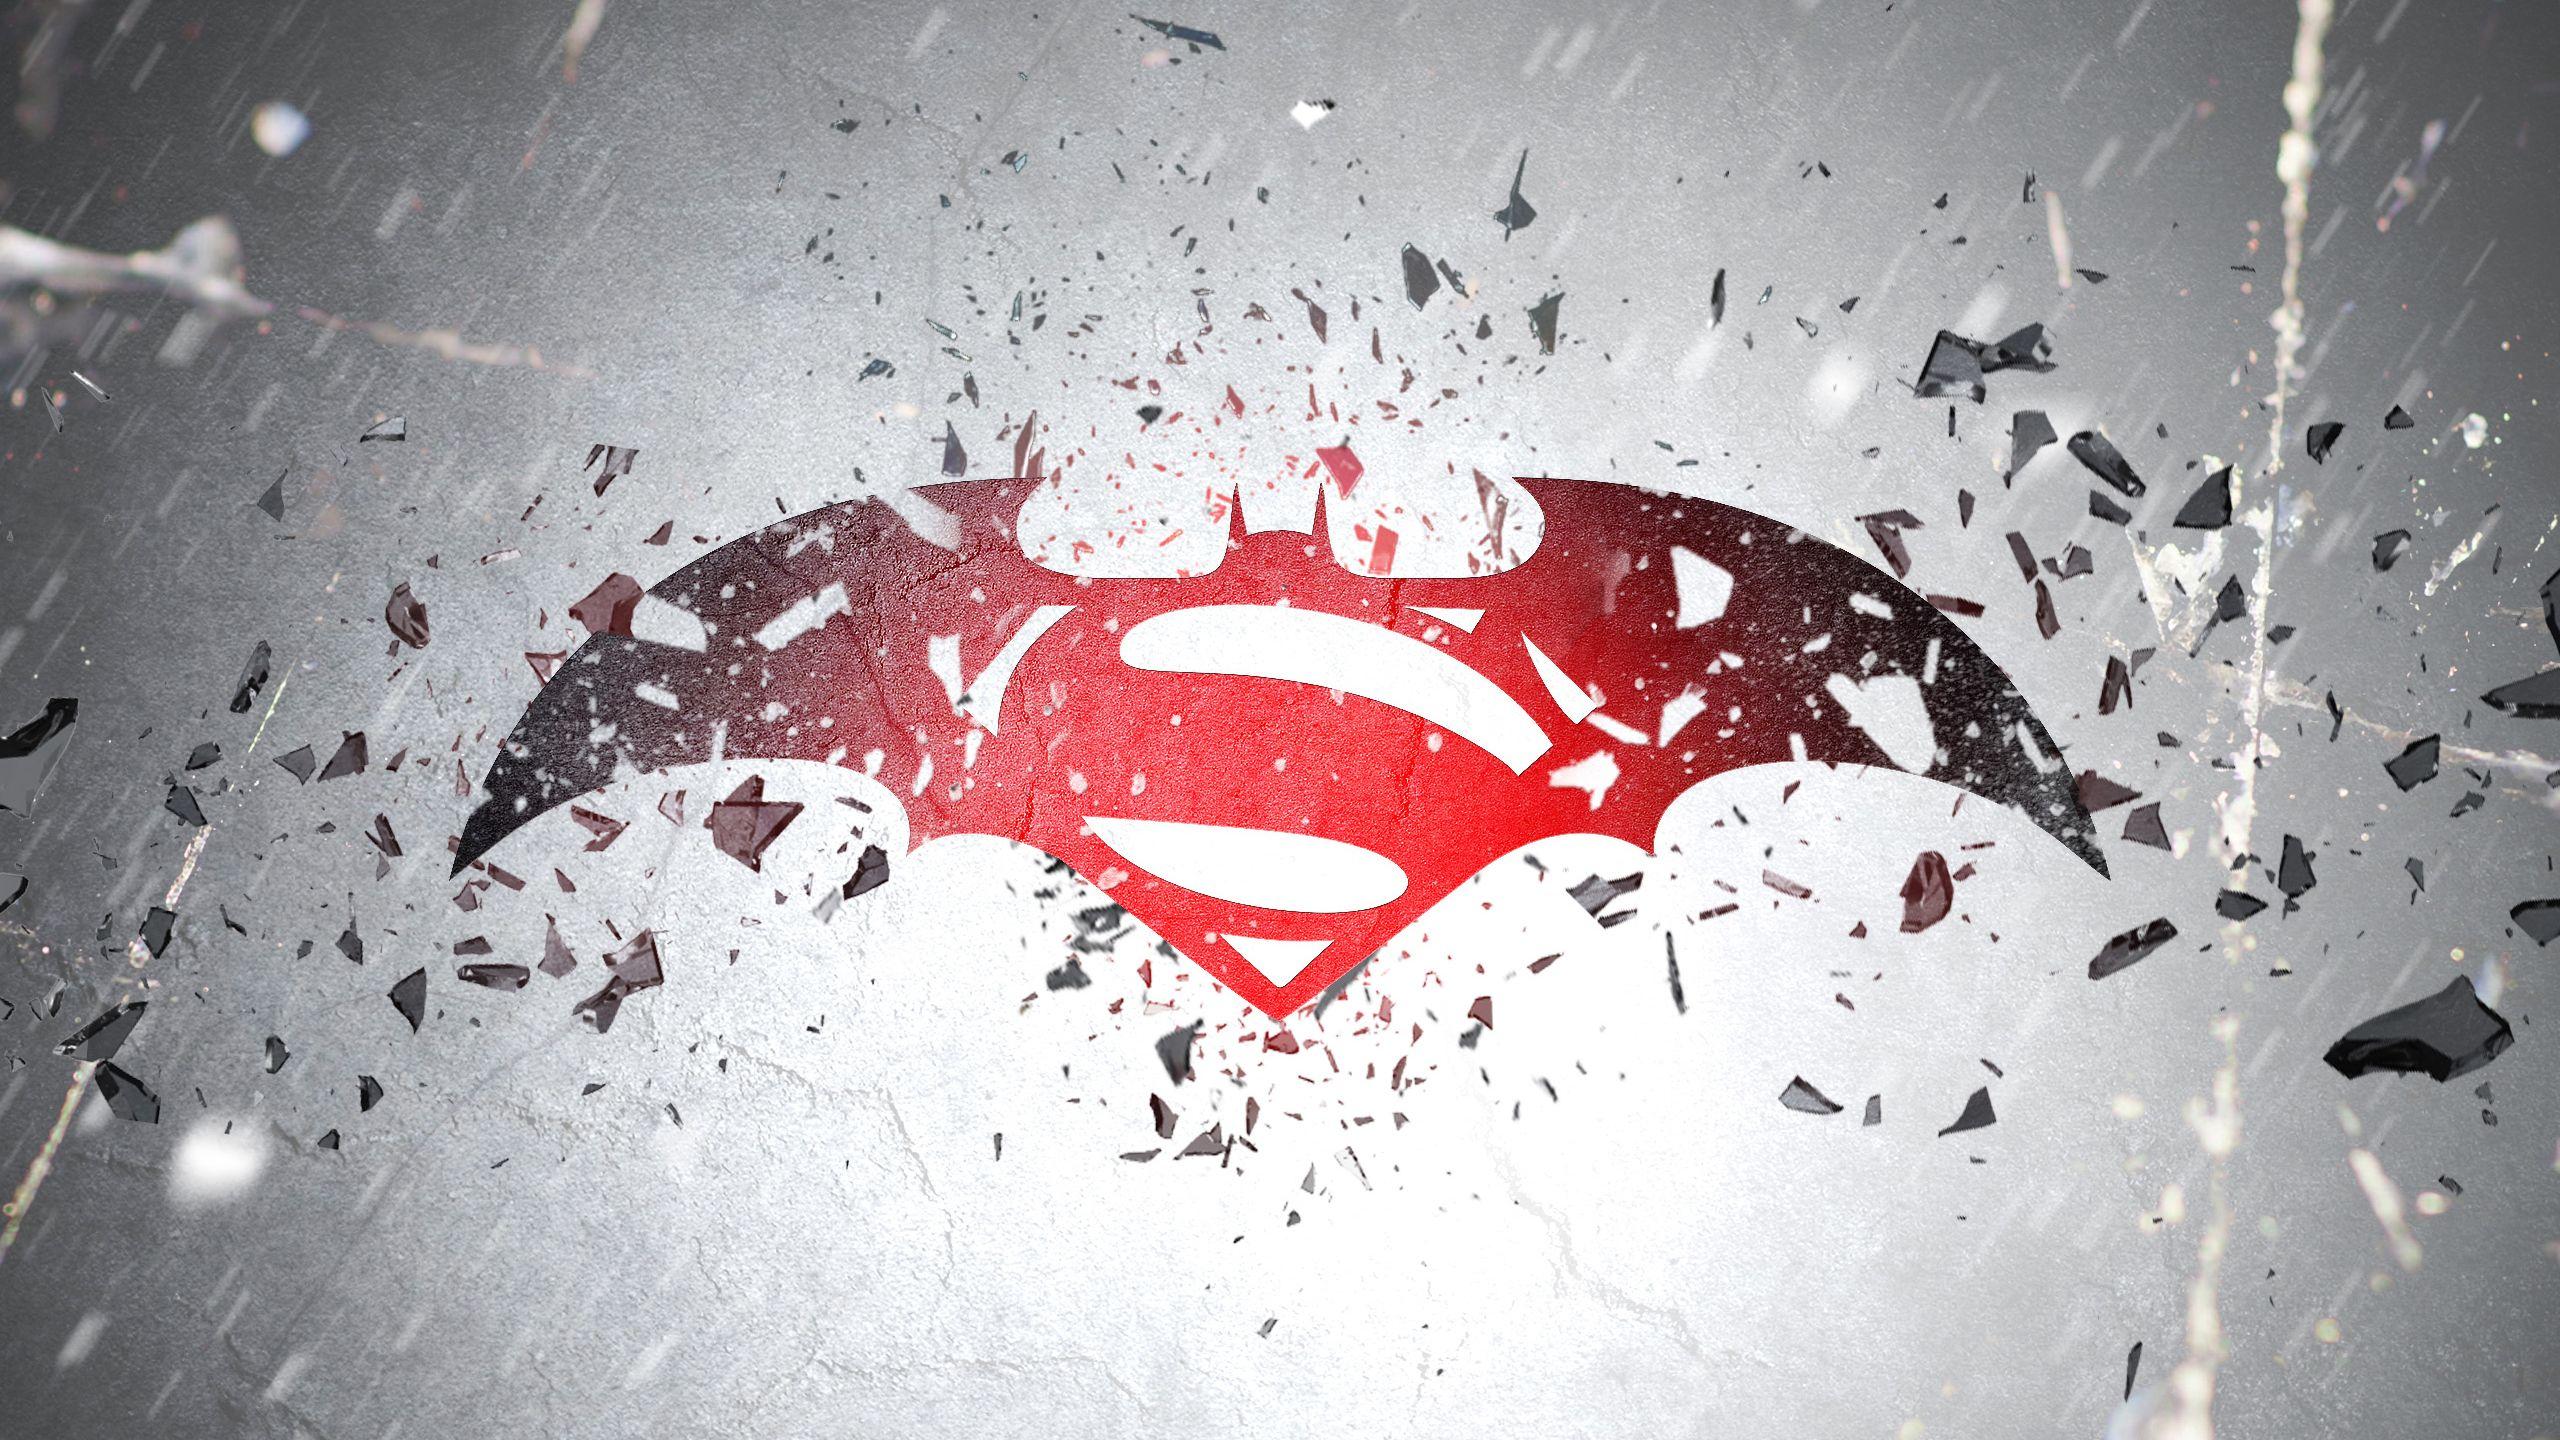 Batman v Superman: Dawn of Justice HD wallpapers free download